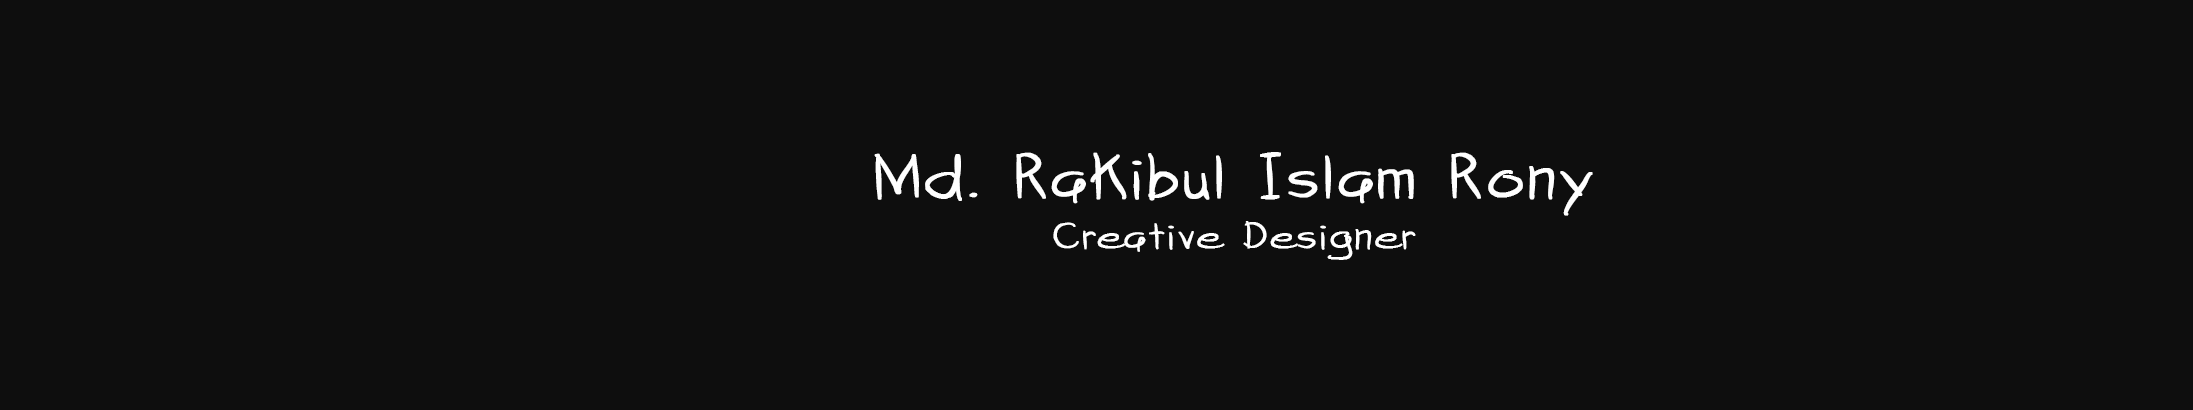 Md. Rakibul Islam Rony's profile banner